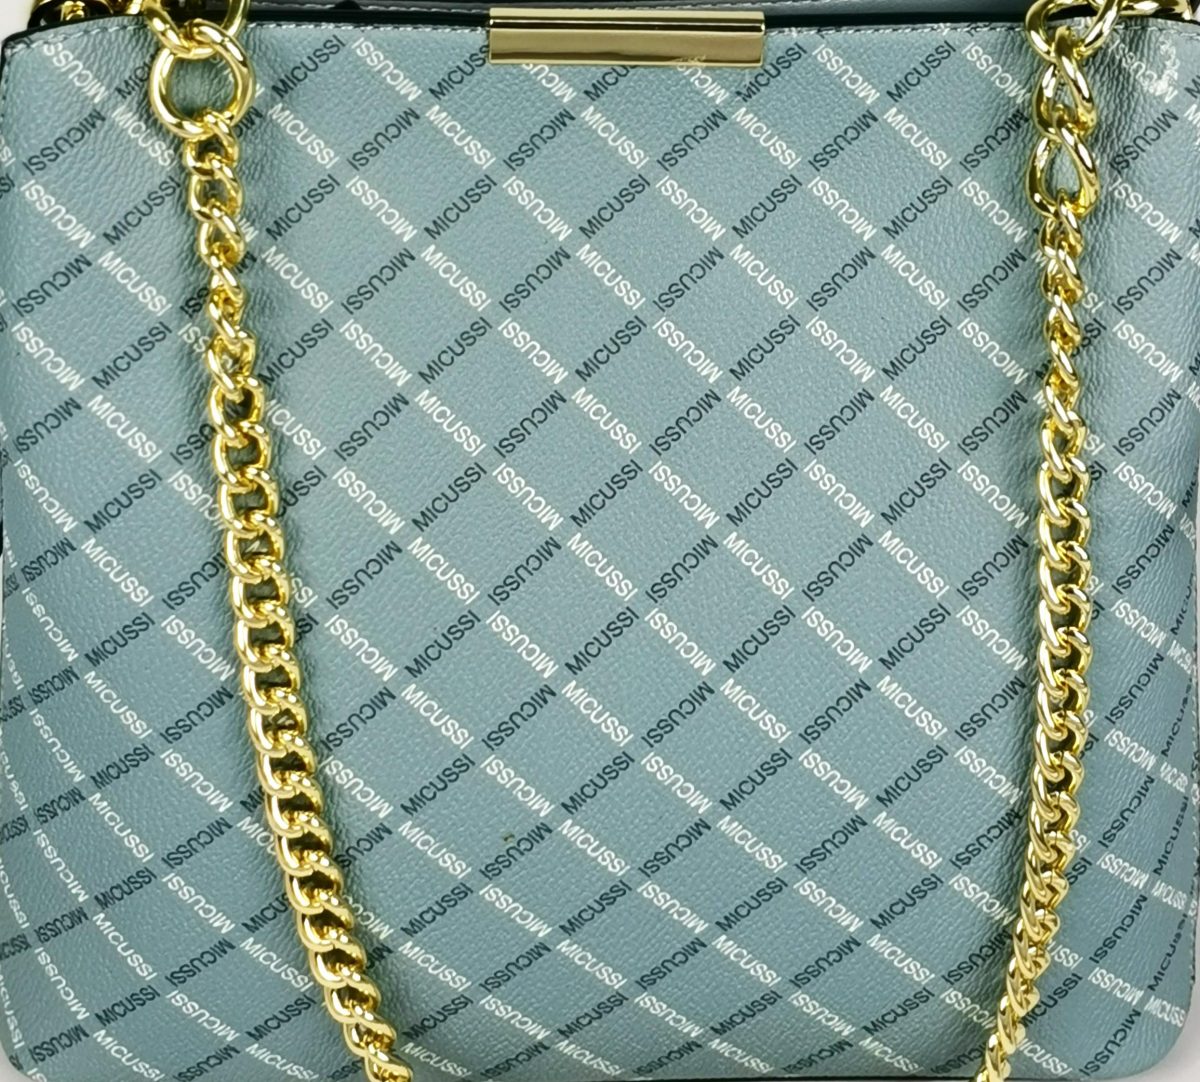 Blue shoulder bag with gold chain